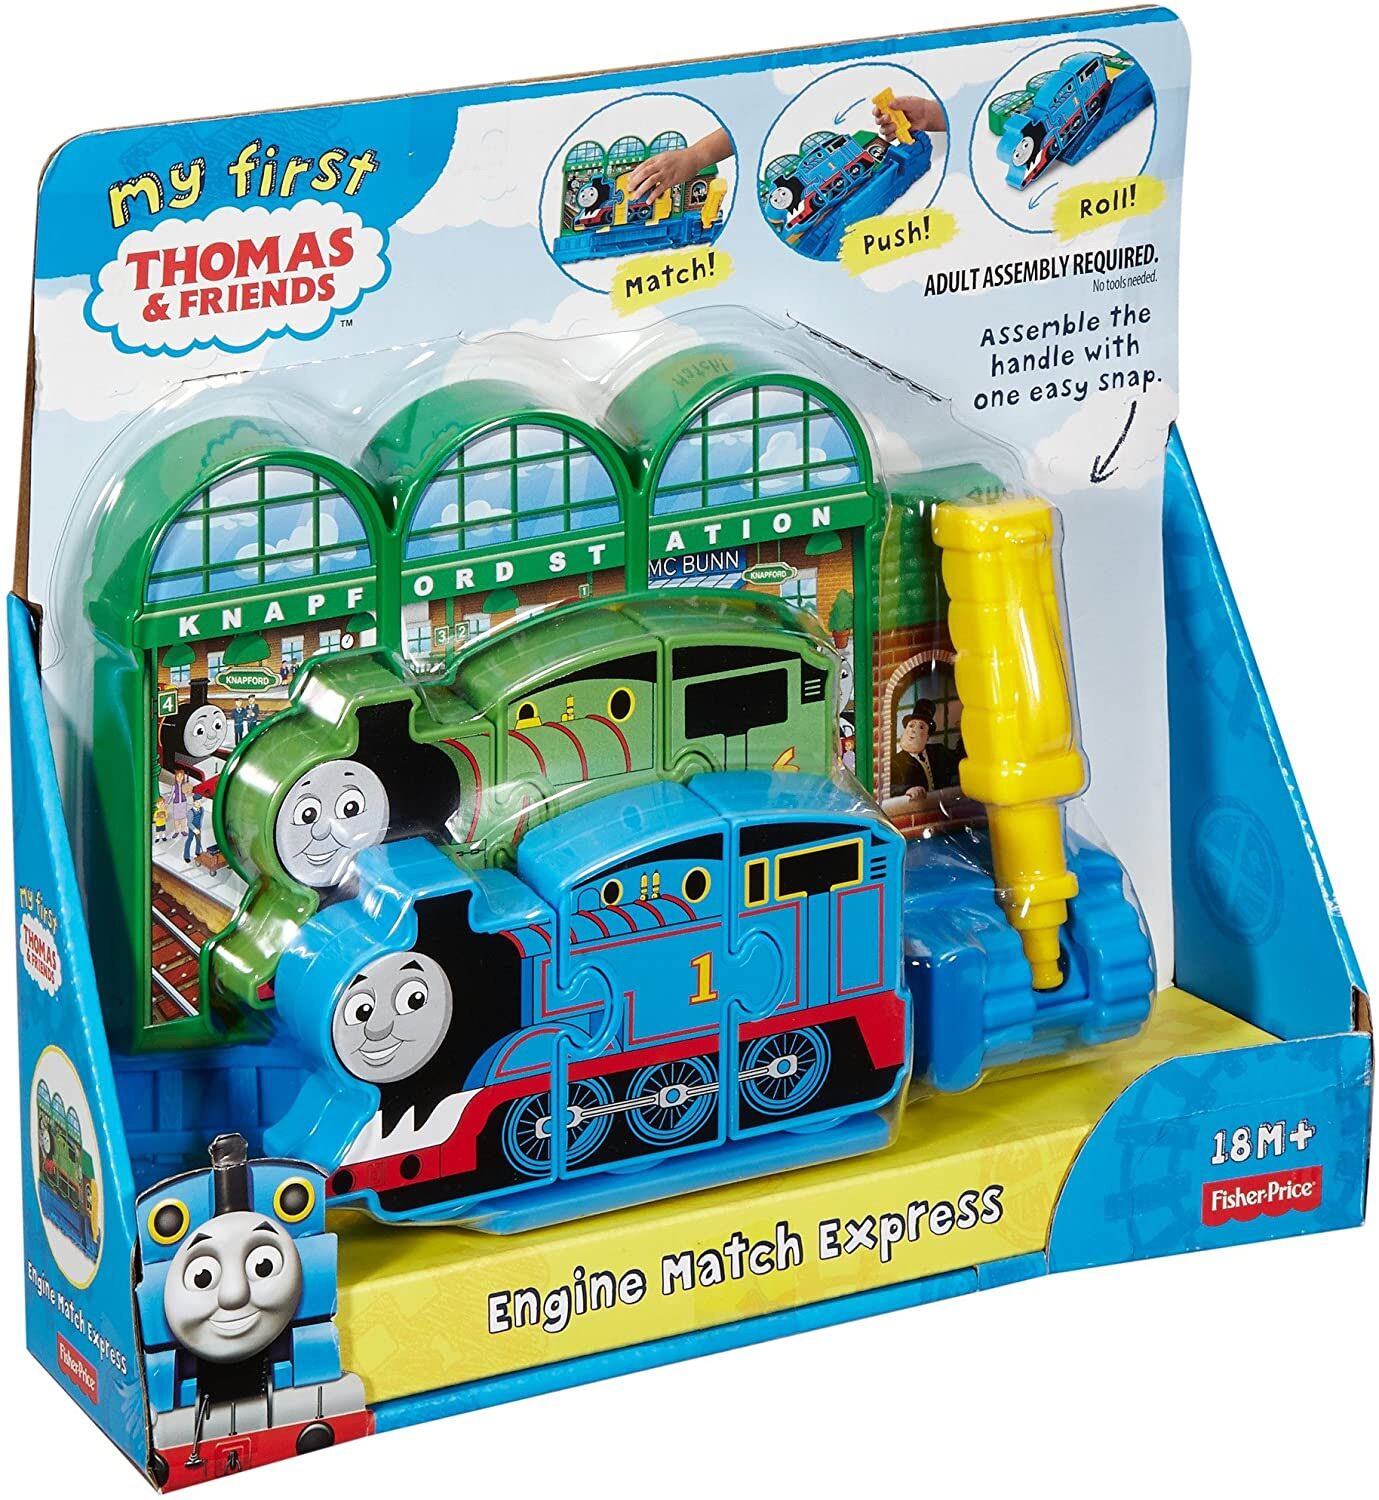 My First Thomas & Friends, Engine Match Express, 18m+